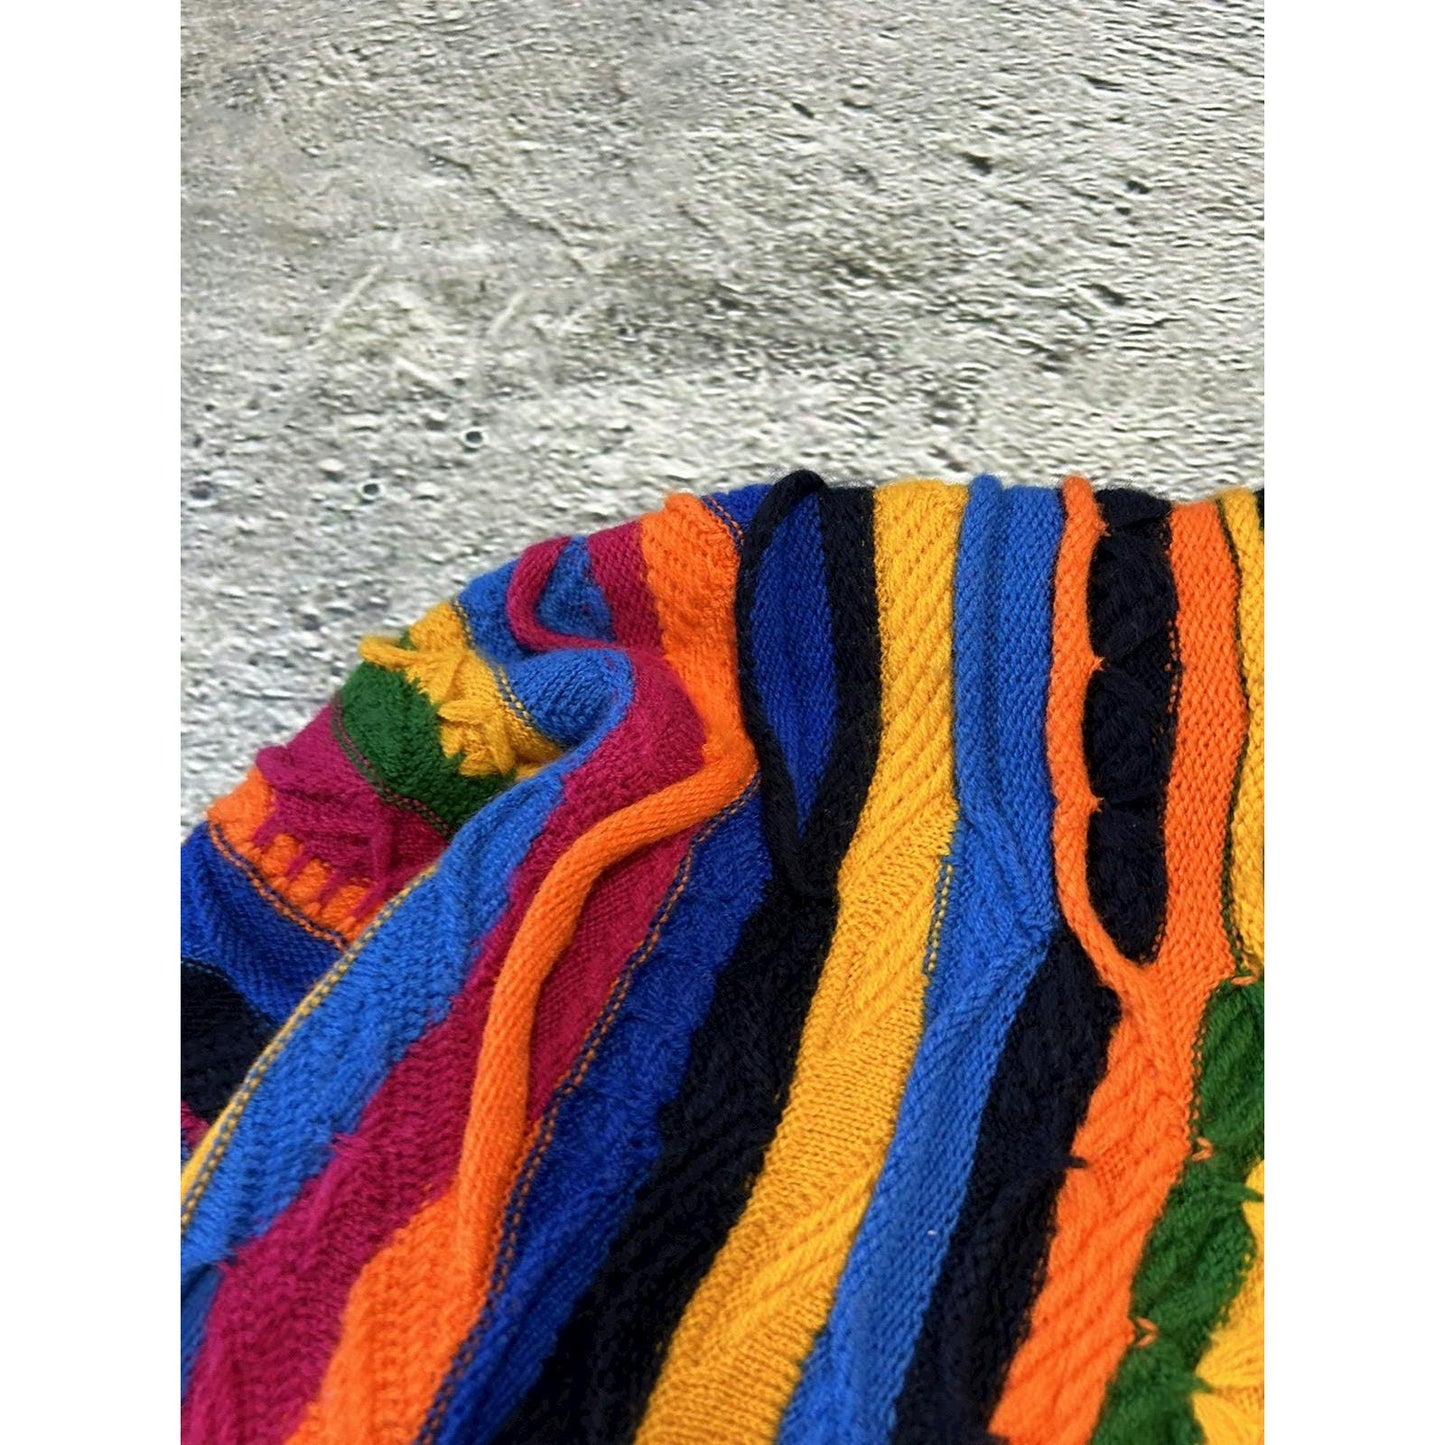 Coogi sweater vintage multicolor cable knit red orange blue